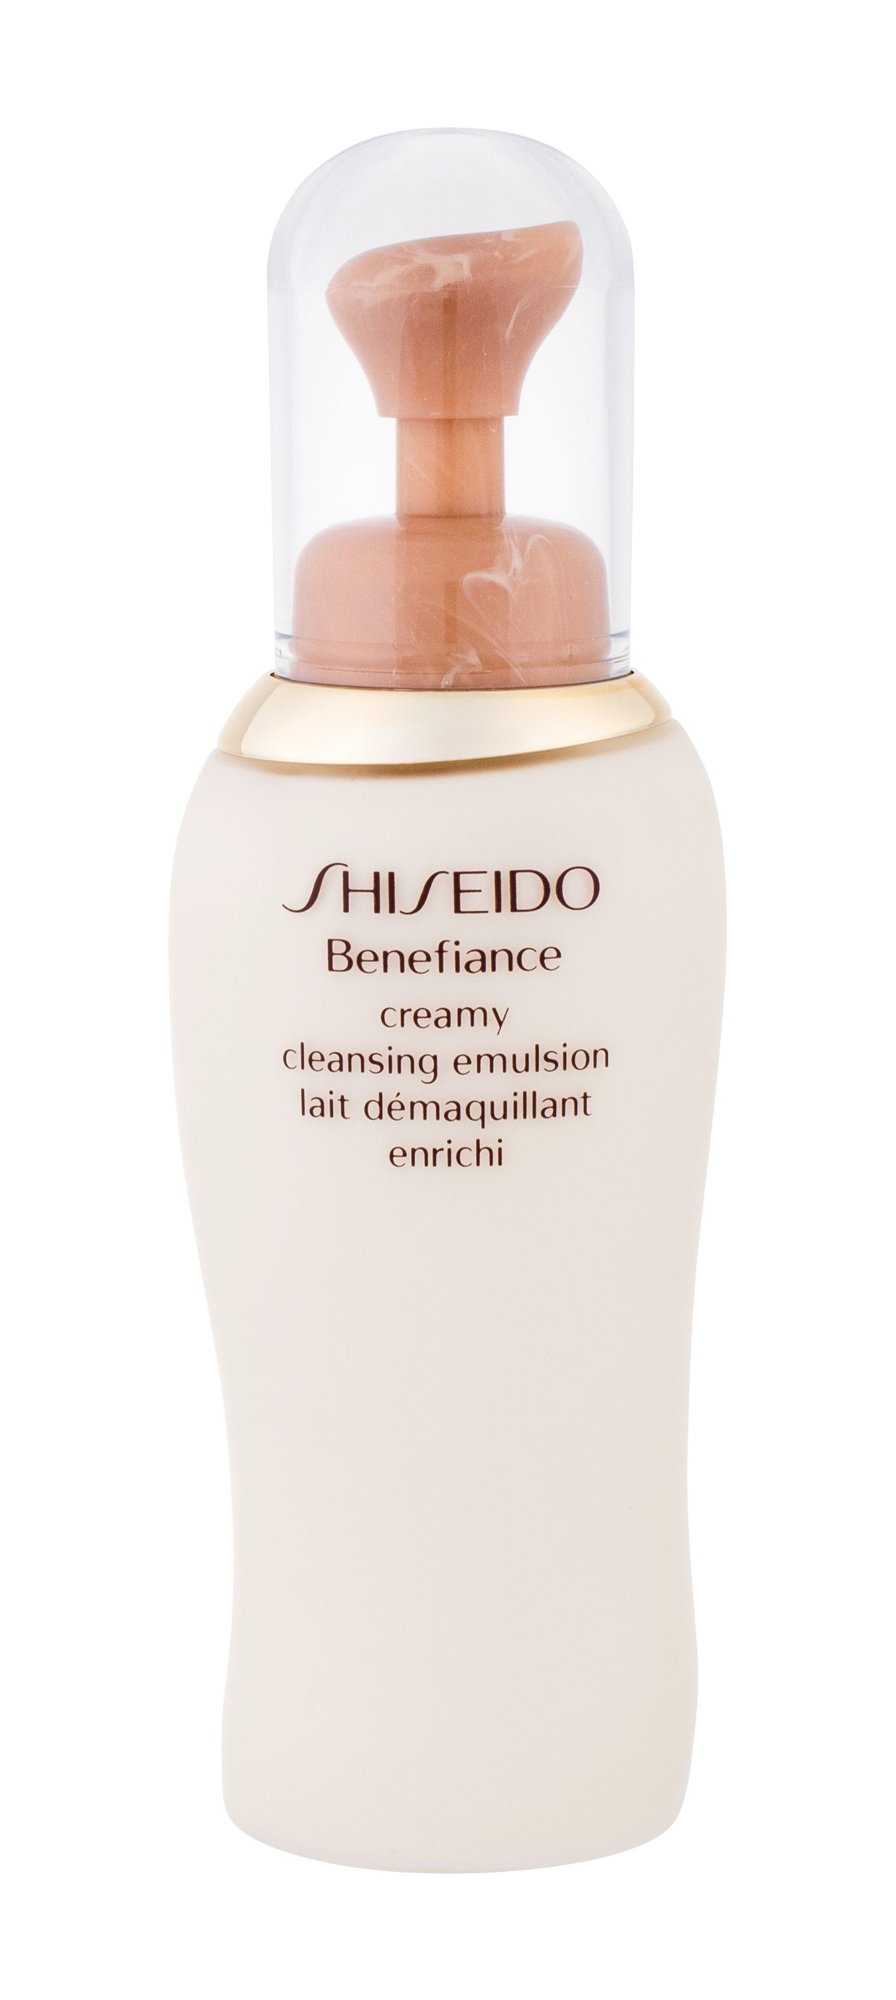 Shiseido Benefiance Creamy Cleansing Emulsion veido kremas